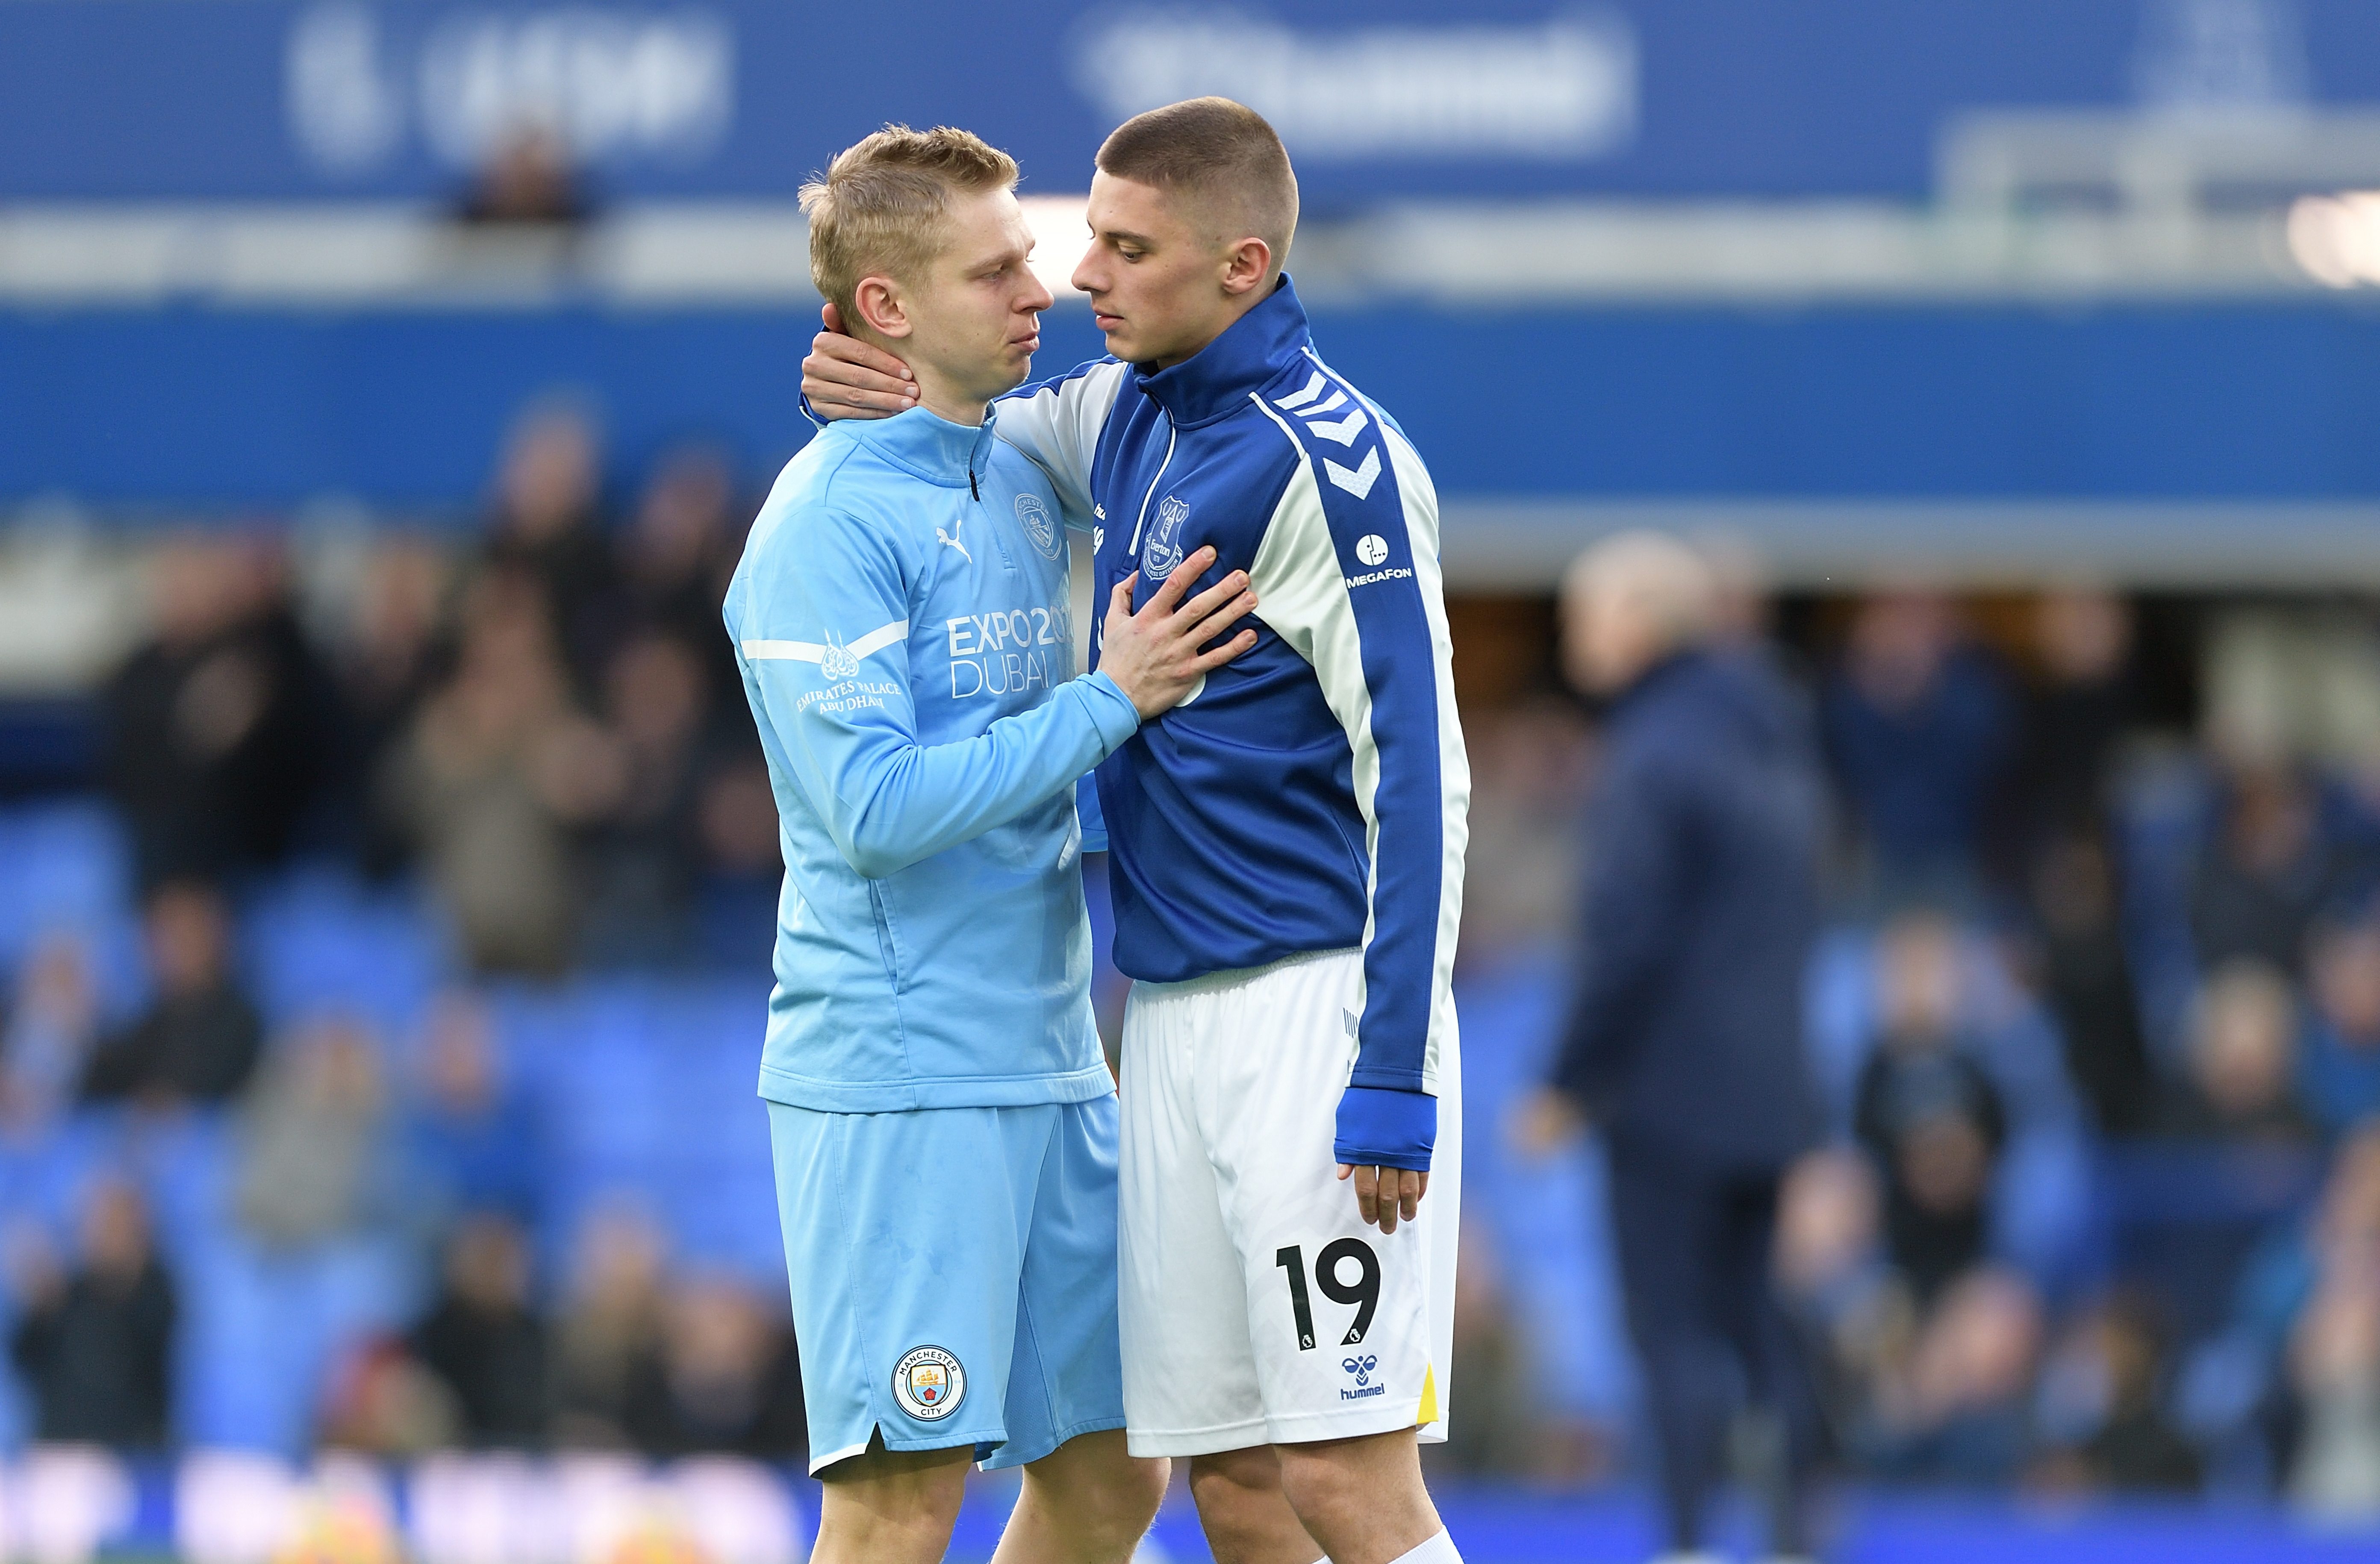 The pair shared an embrace pre-match